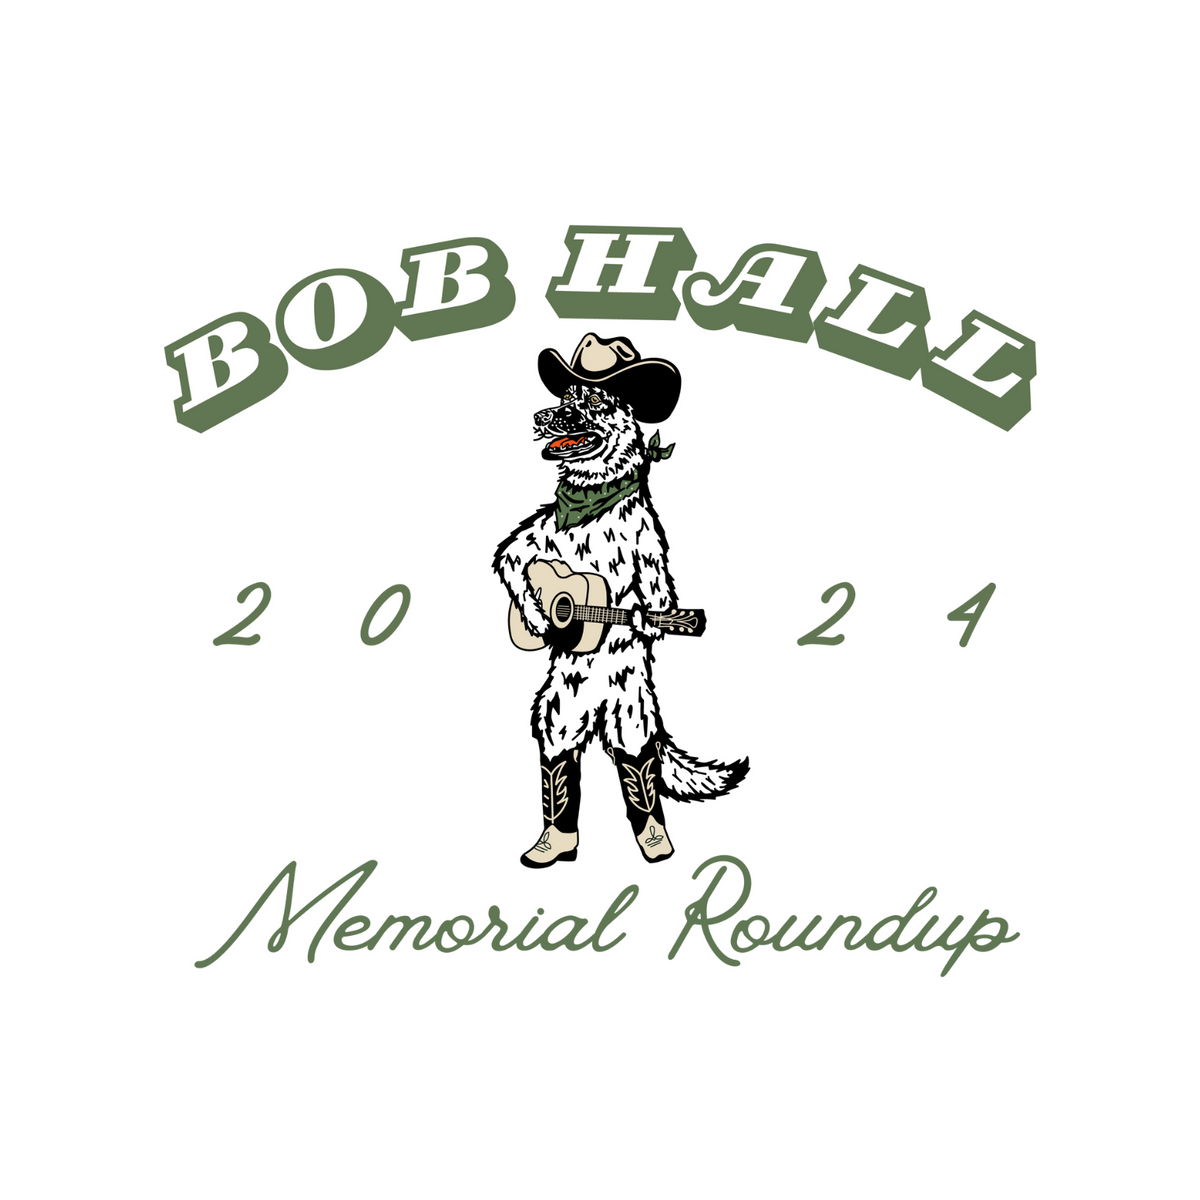 Bob Hall Memorial Roundup